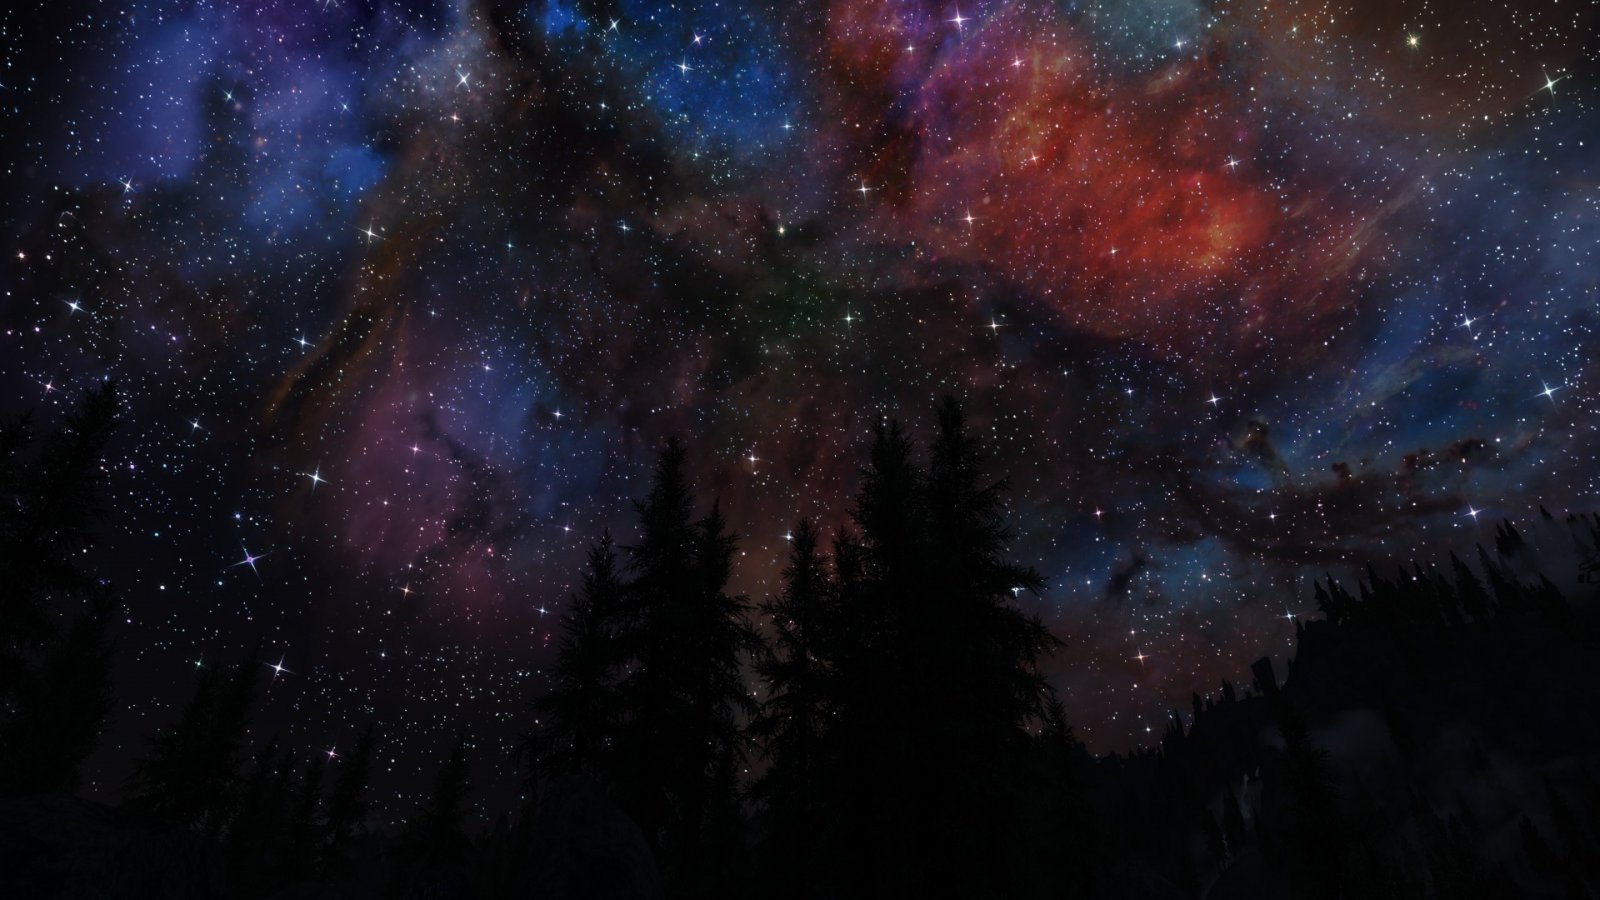 A Skyrim night, with stars shining bright